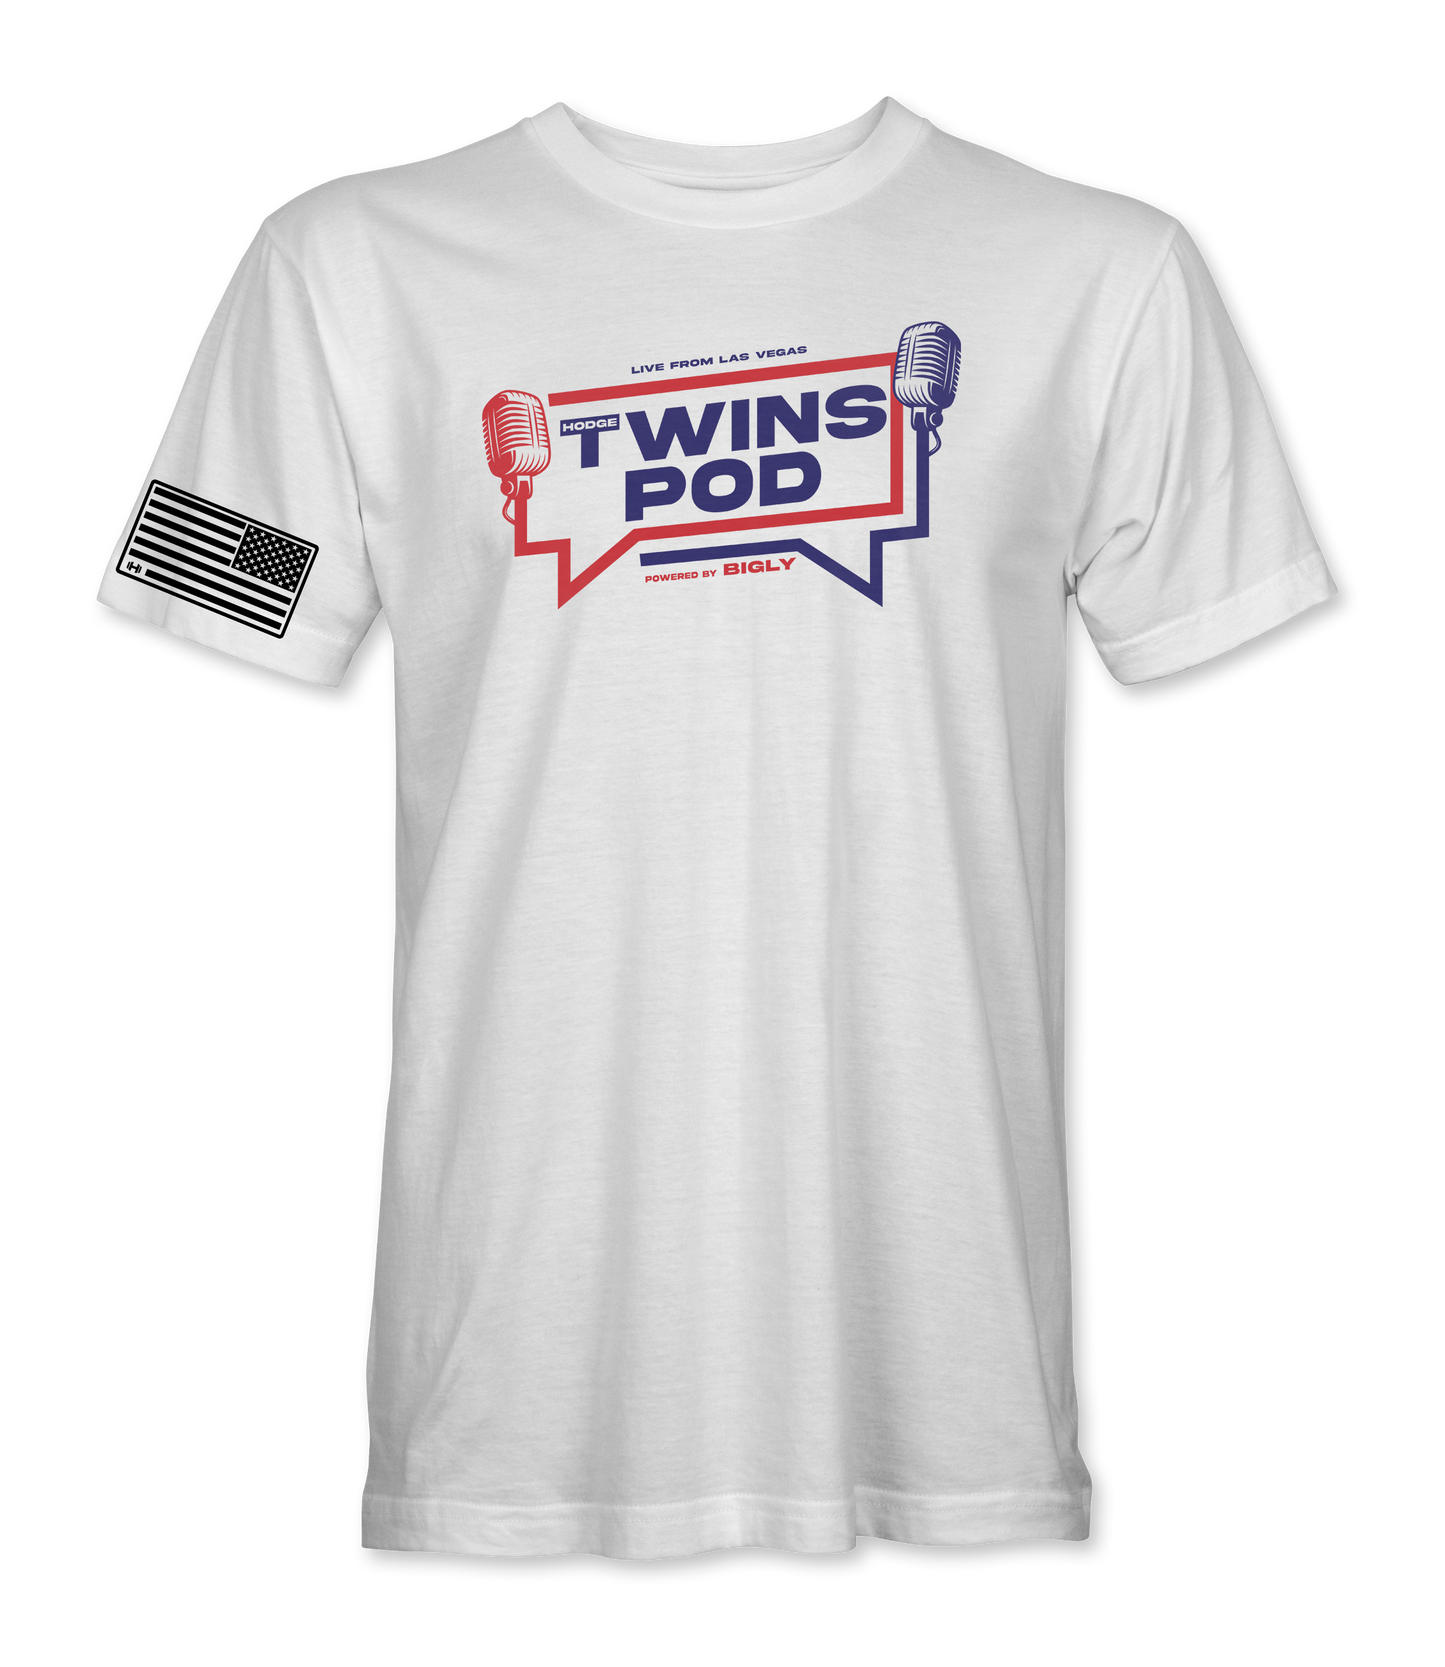 Exclusive Twins Pod T-Shirt